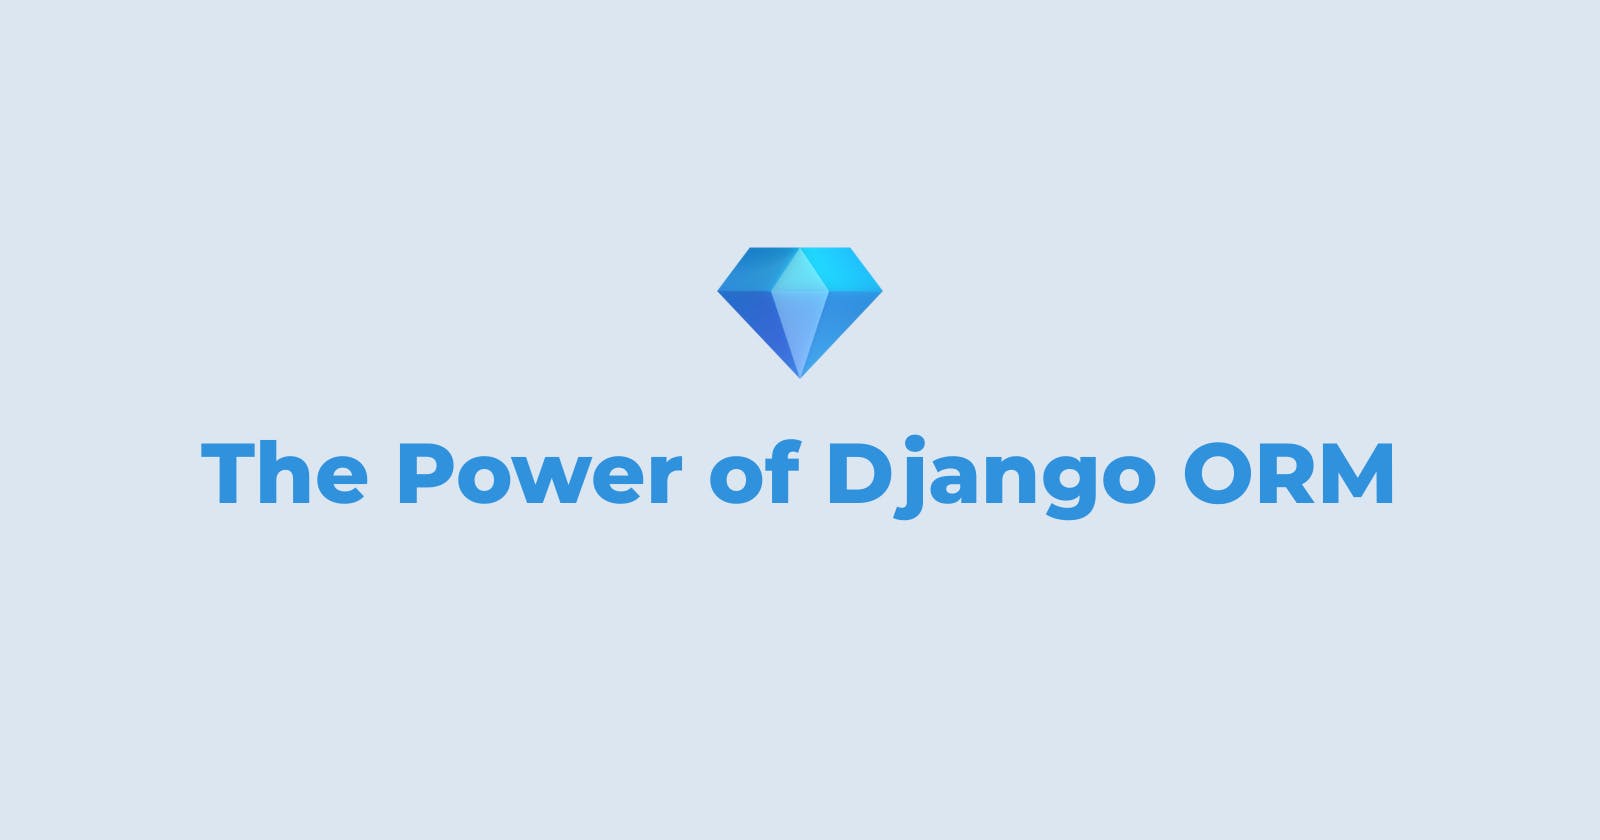 The Power of Django ORM